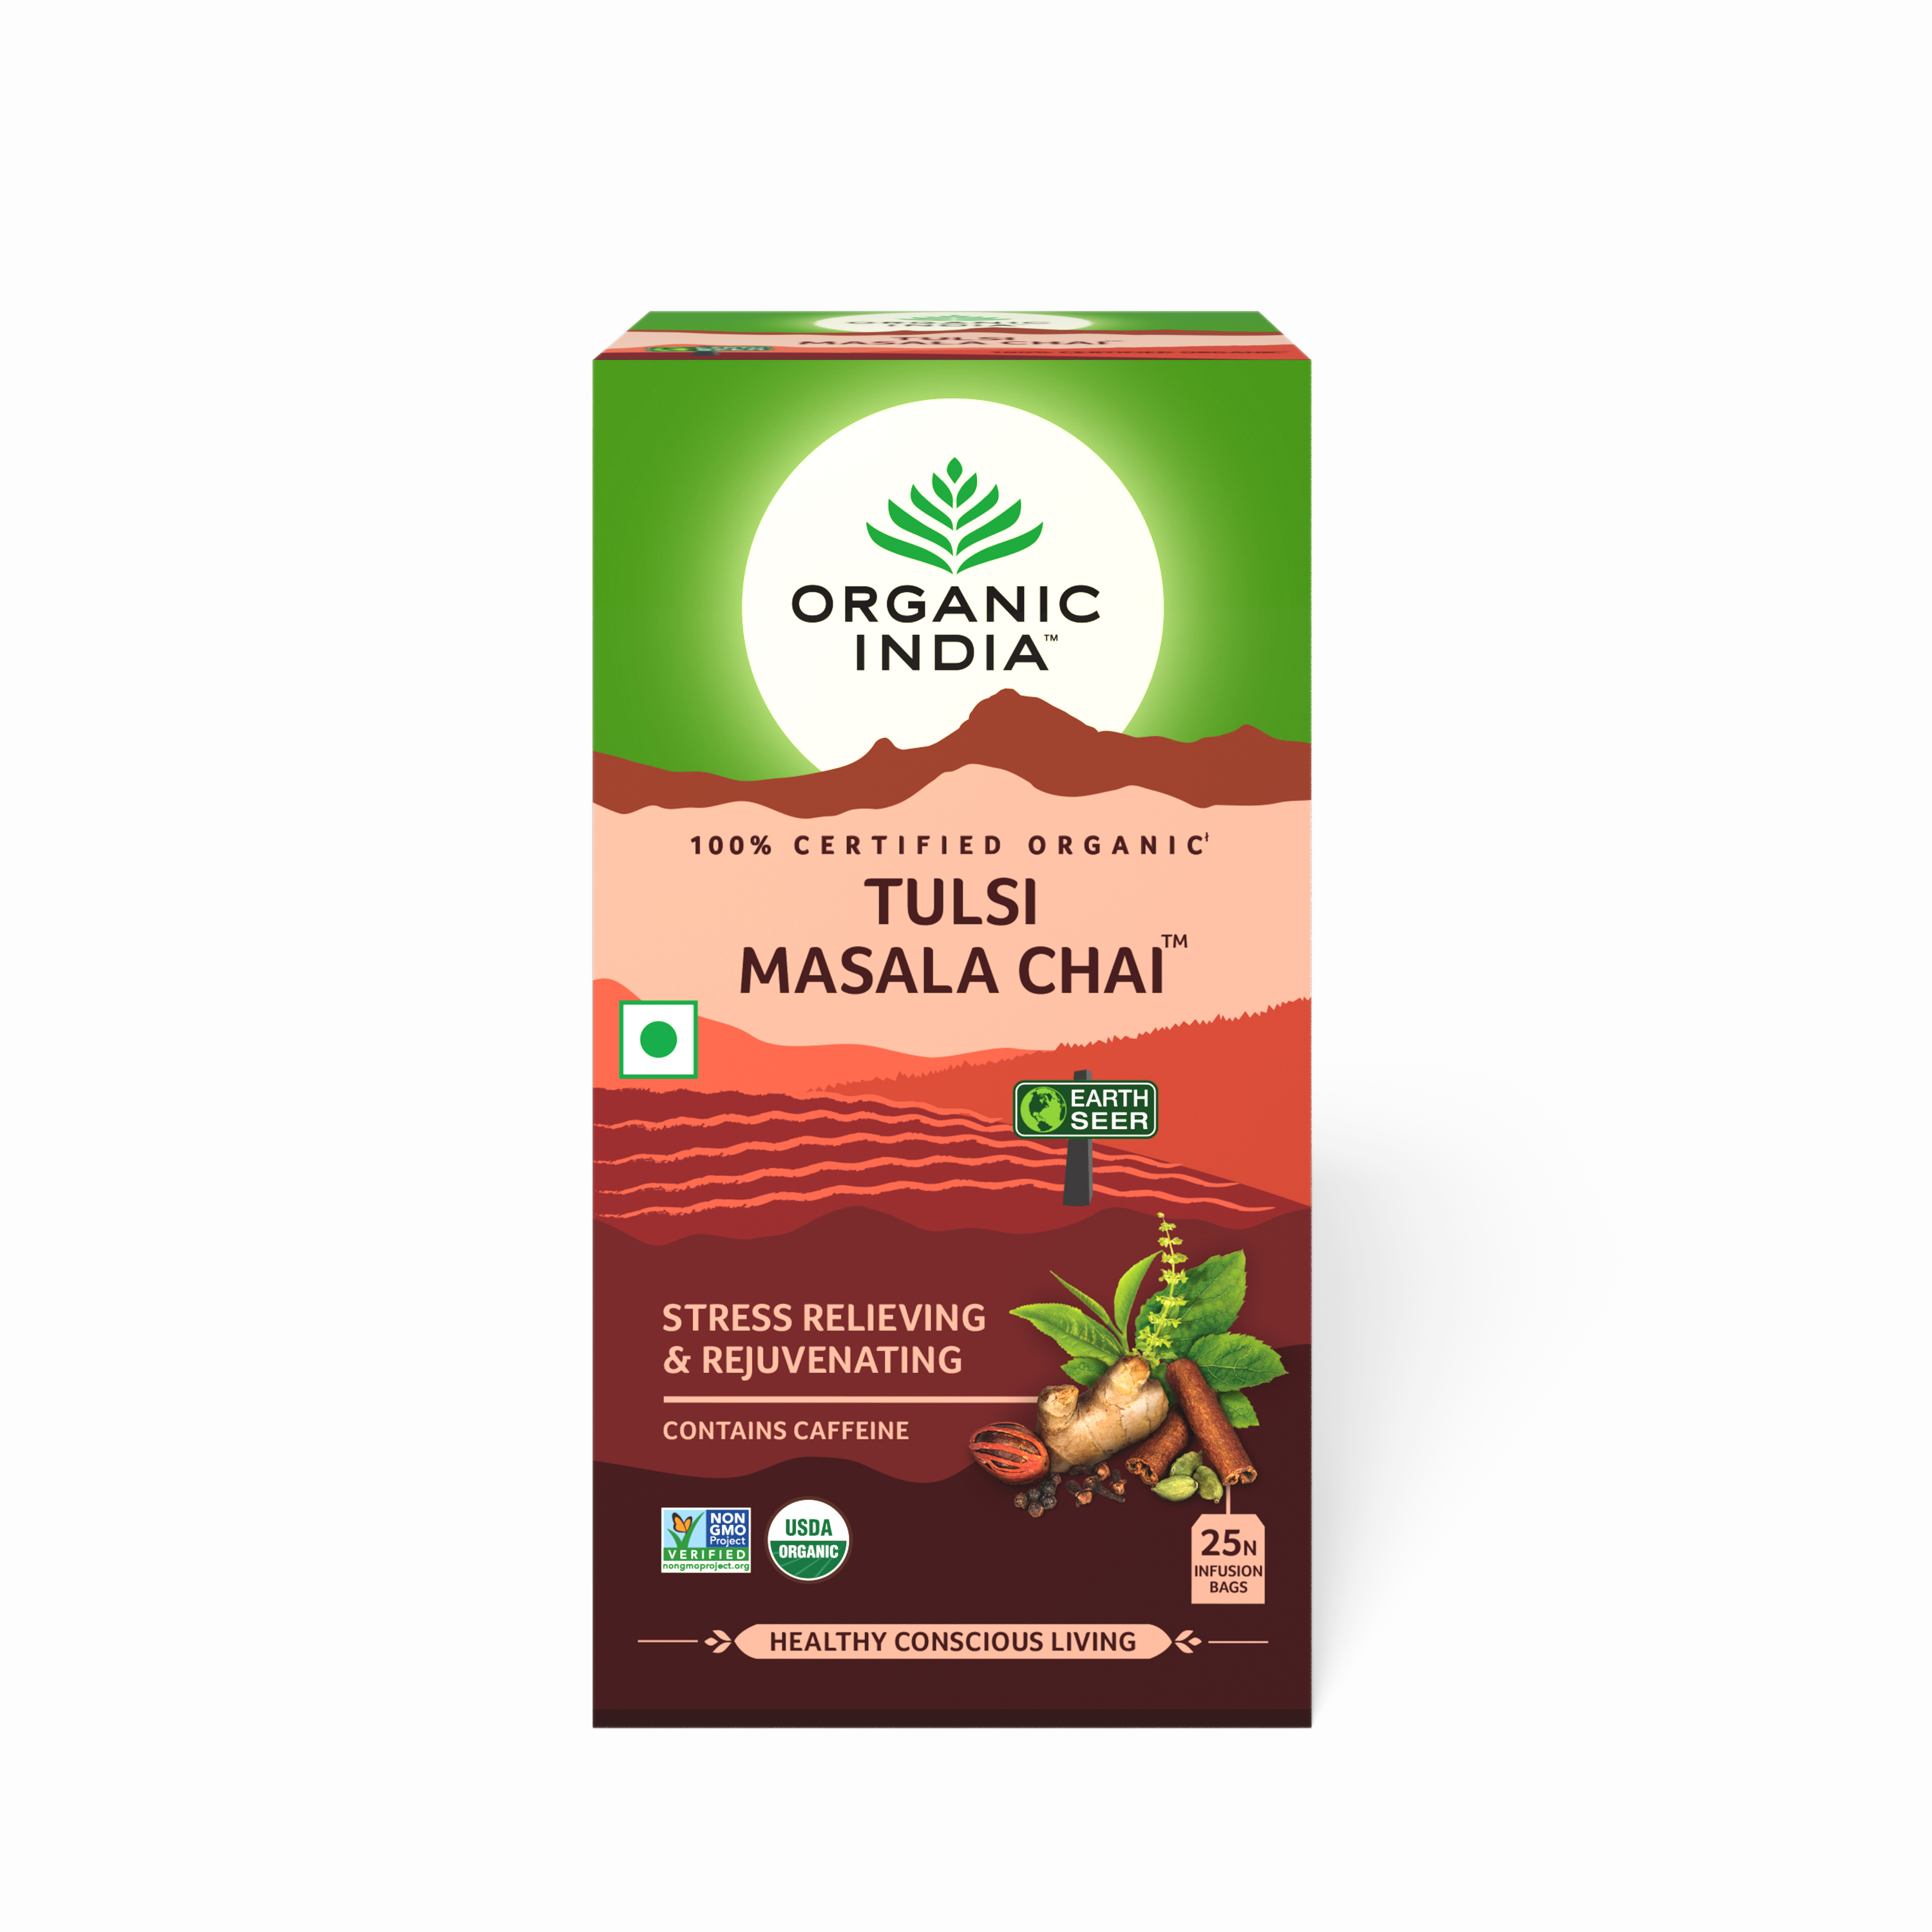 Buy Organic India Tulsi Masala Chai at Best Price Online